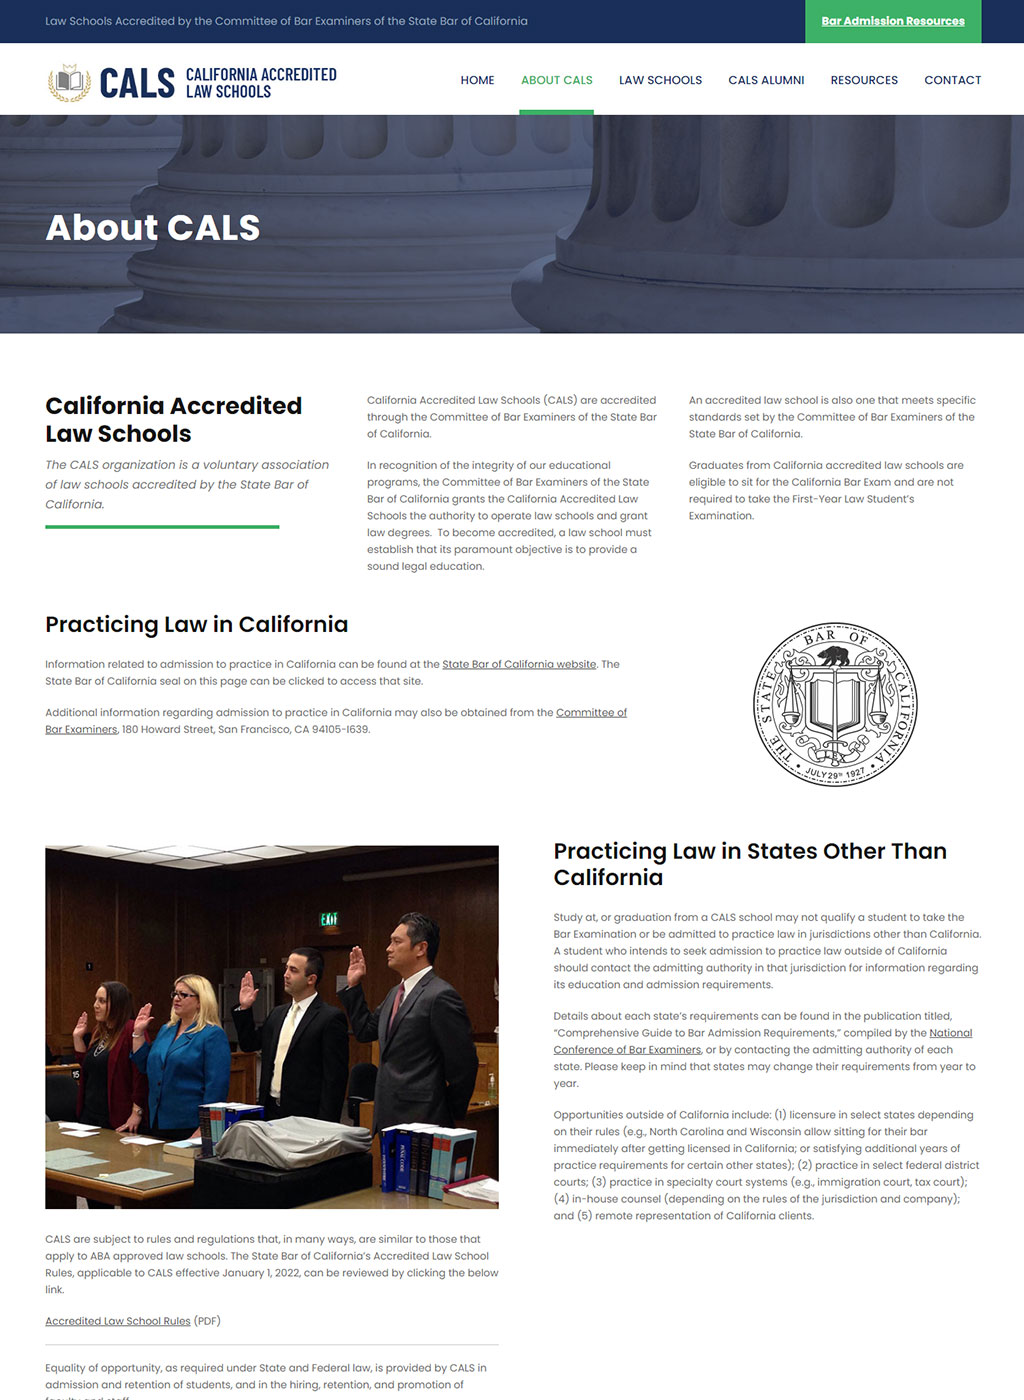 Web development for California Accredited Law Schools (CALS)